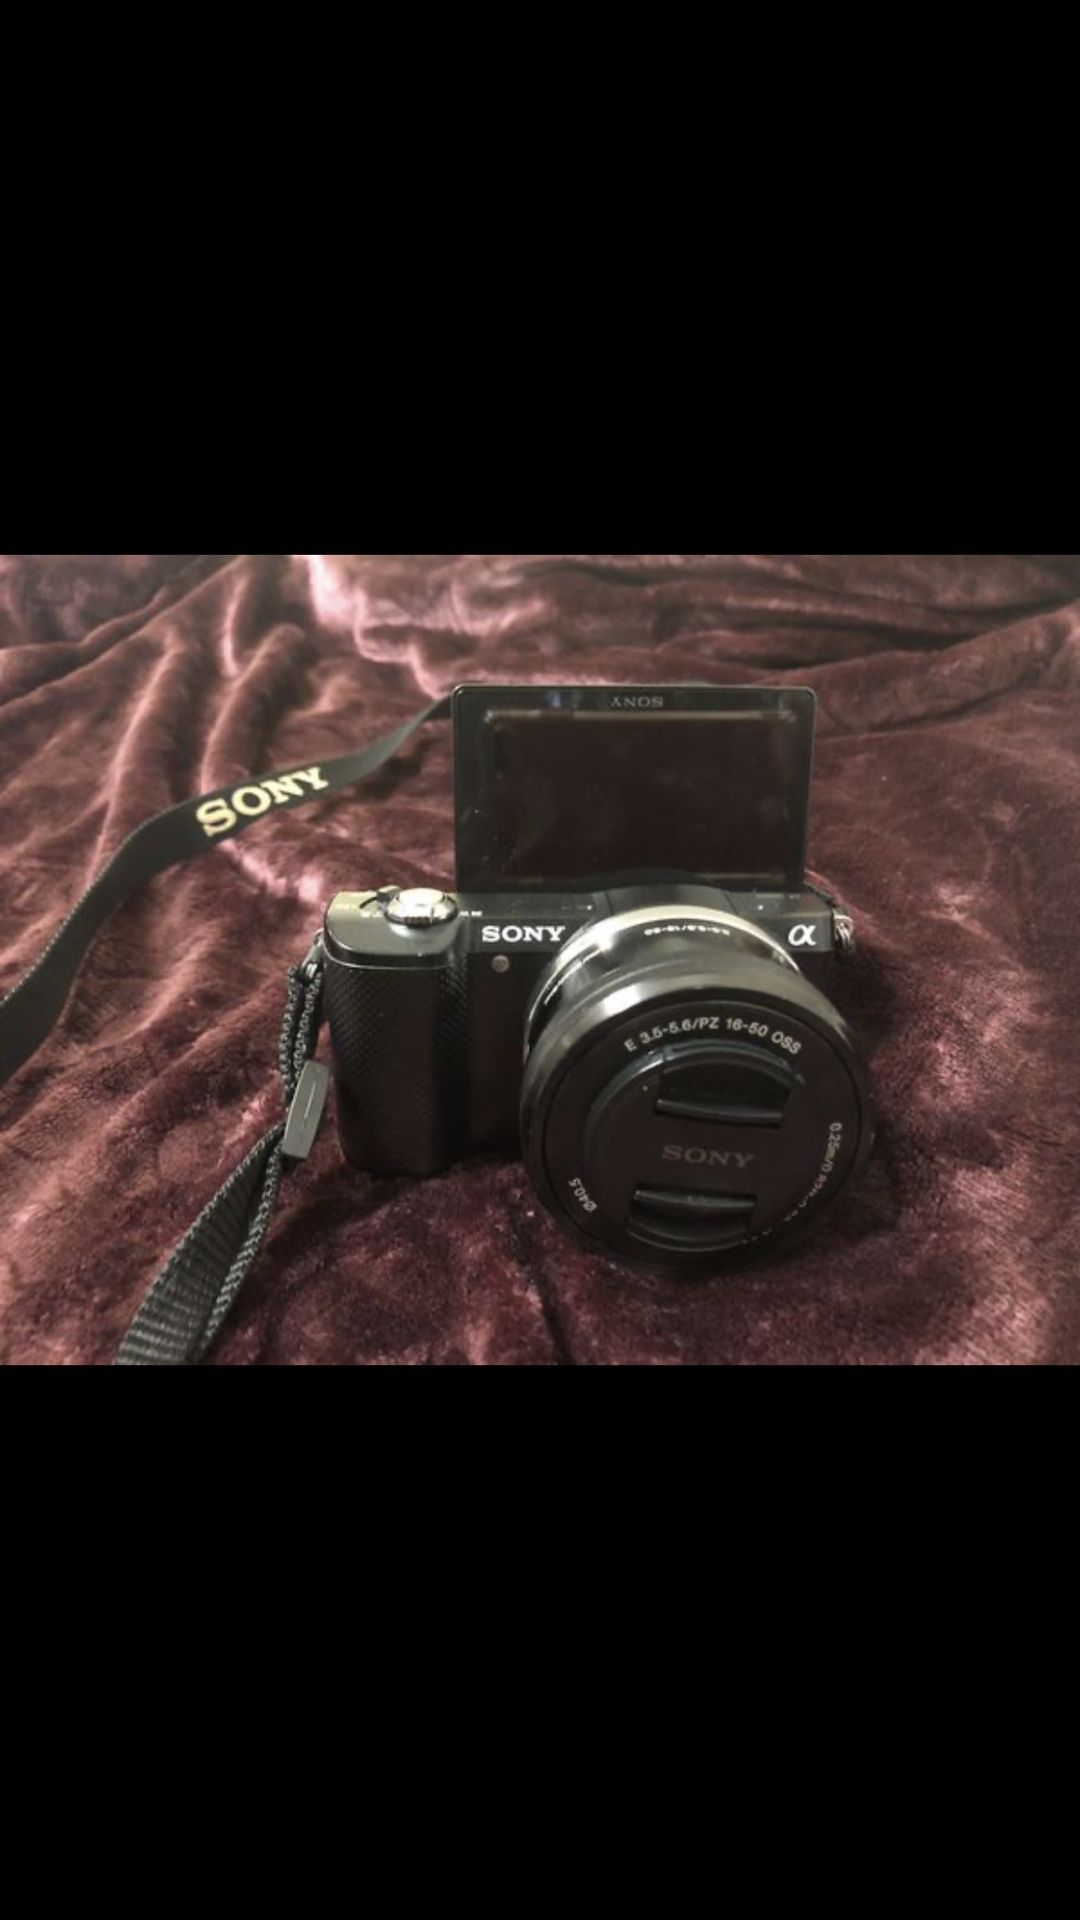 Sony a5000 w/ 16-50mm lens